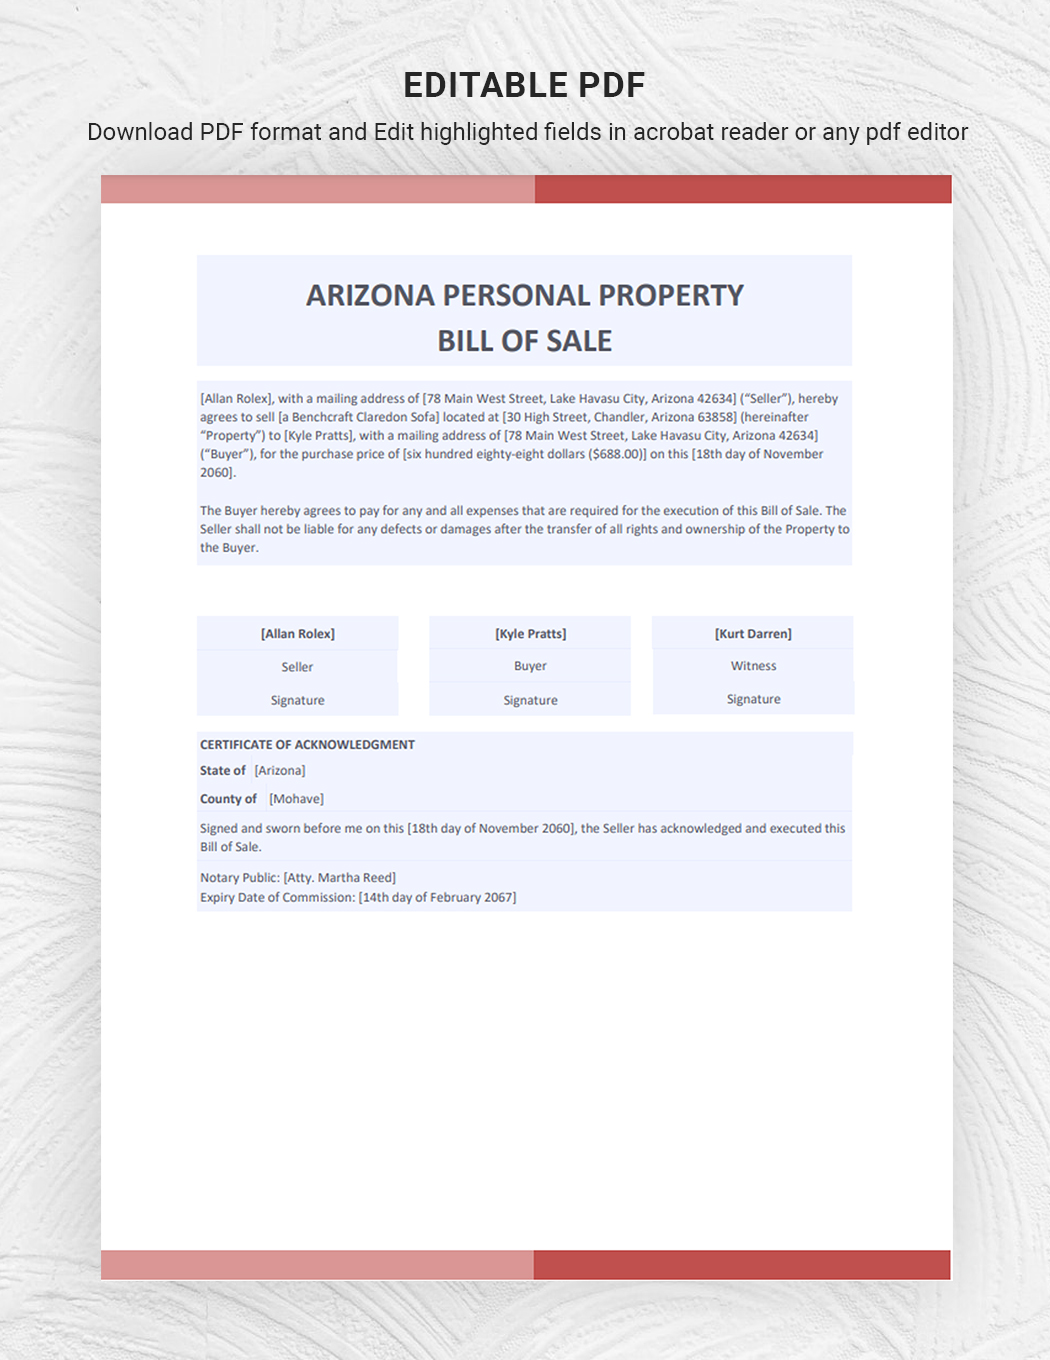 Arizona Personal Property Bill of Sale Template